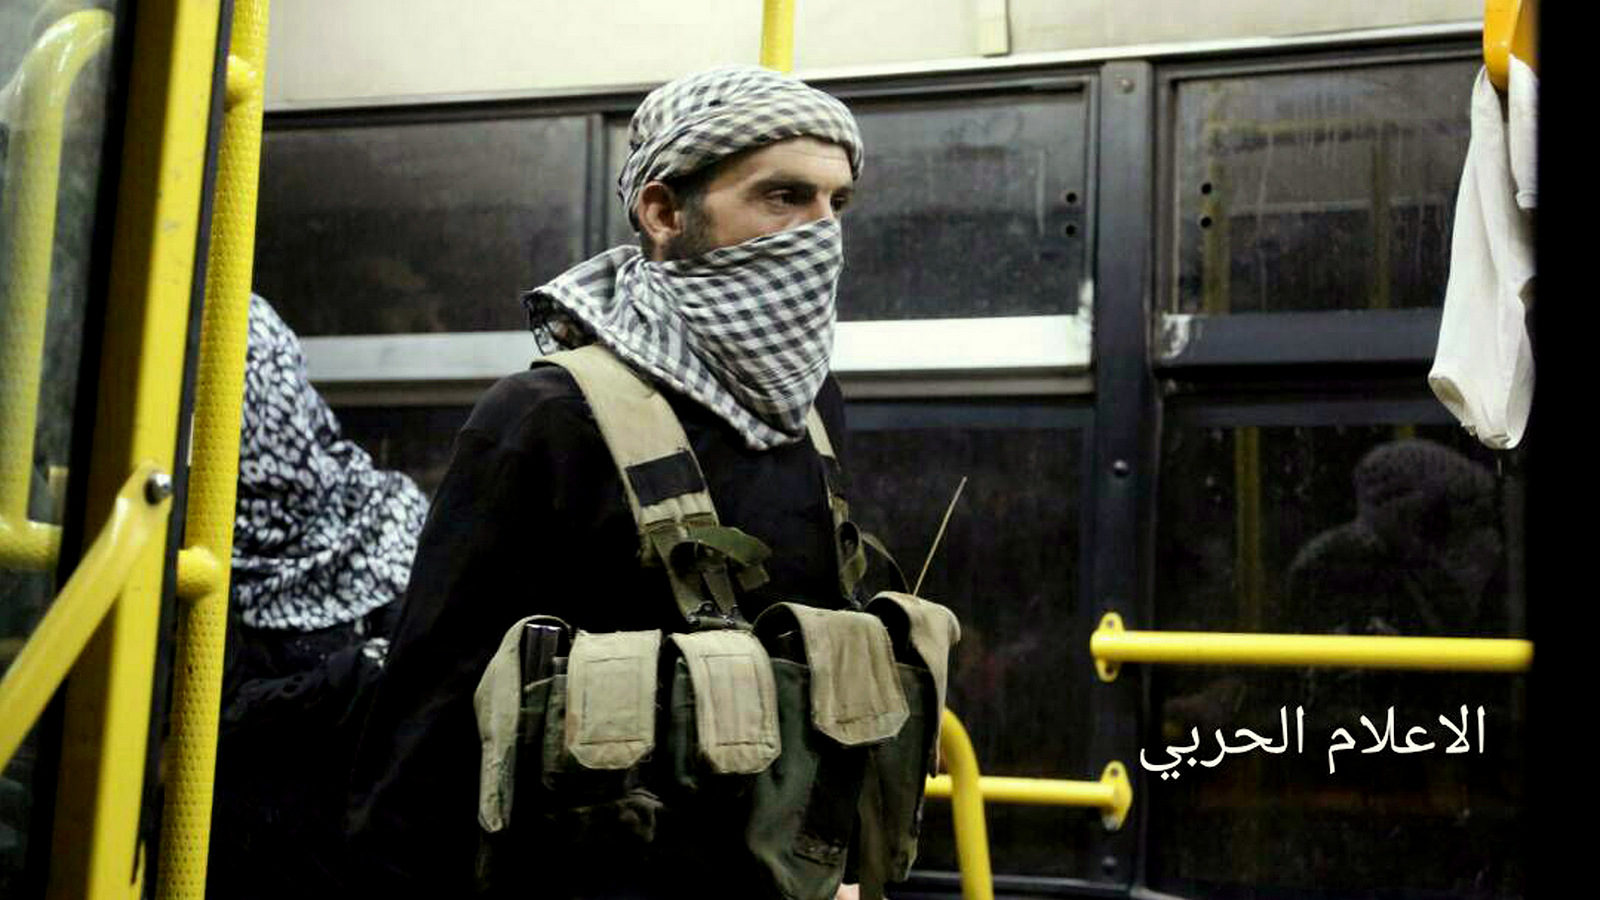 Al-Qaeda Militant